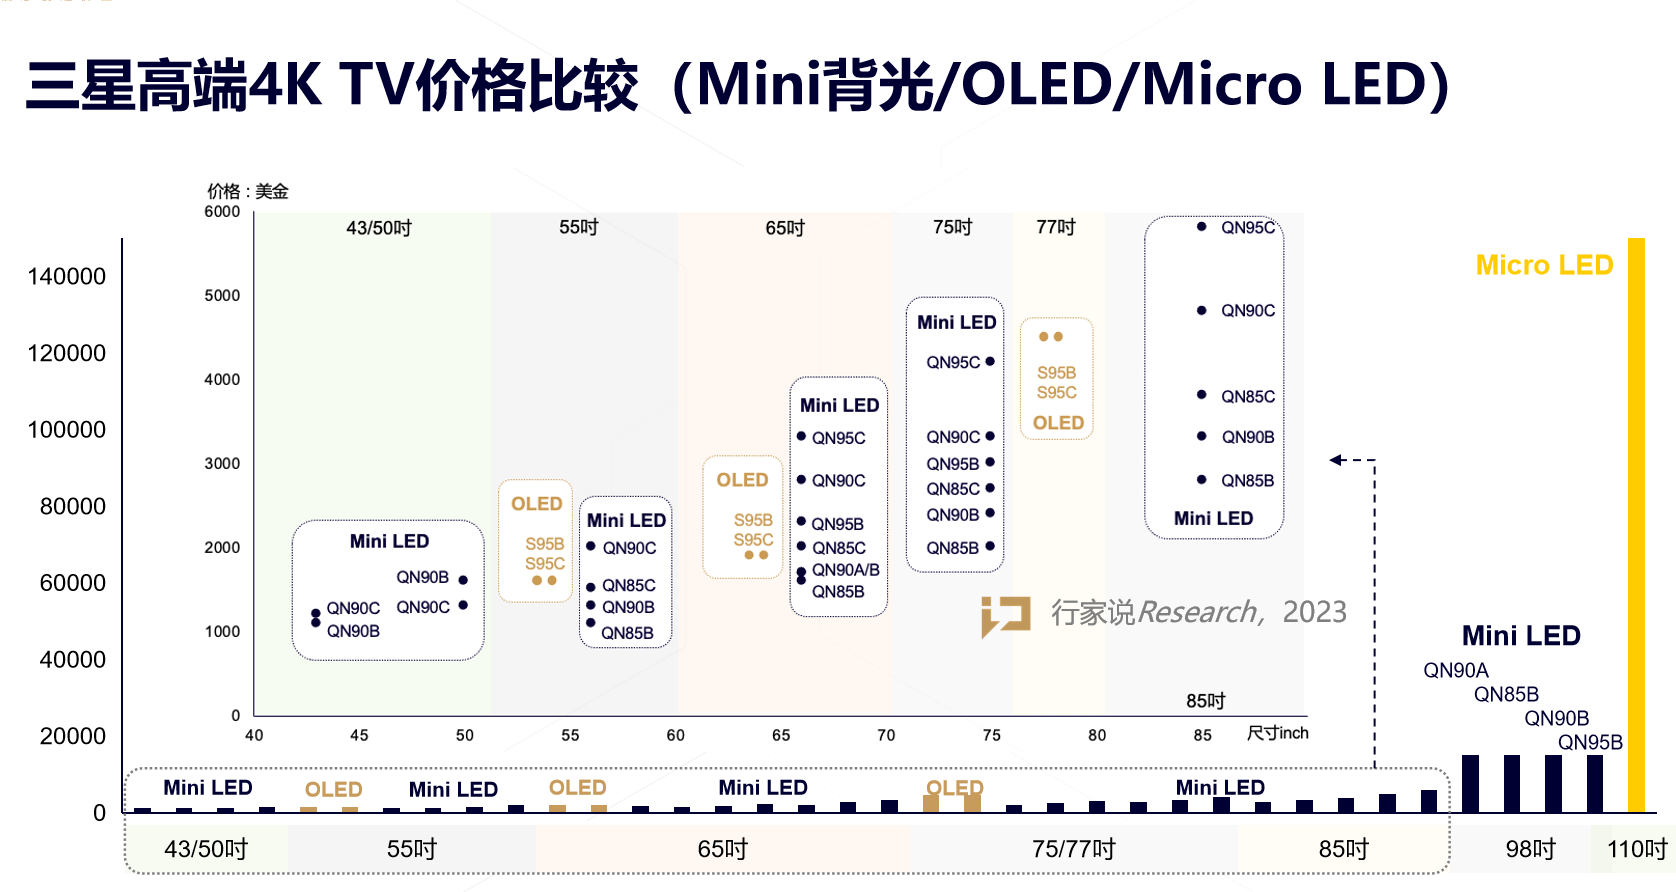 Samsung High-End 4K TV Price Comparison, Mini/OLED/Micro LED